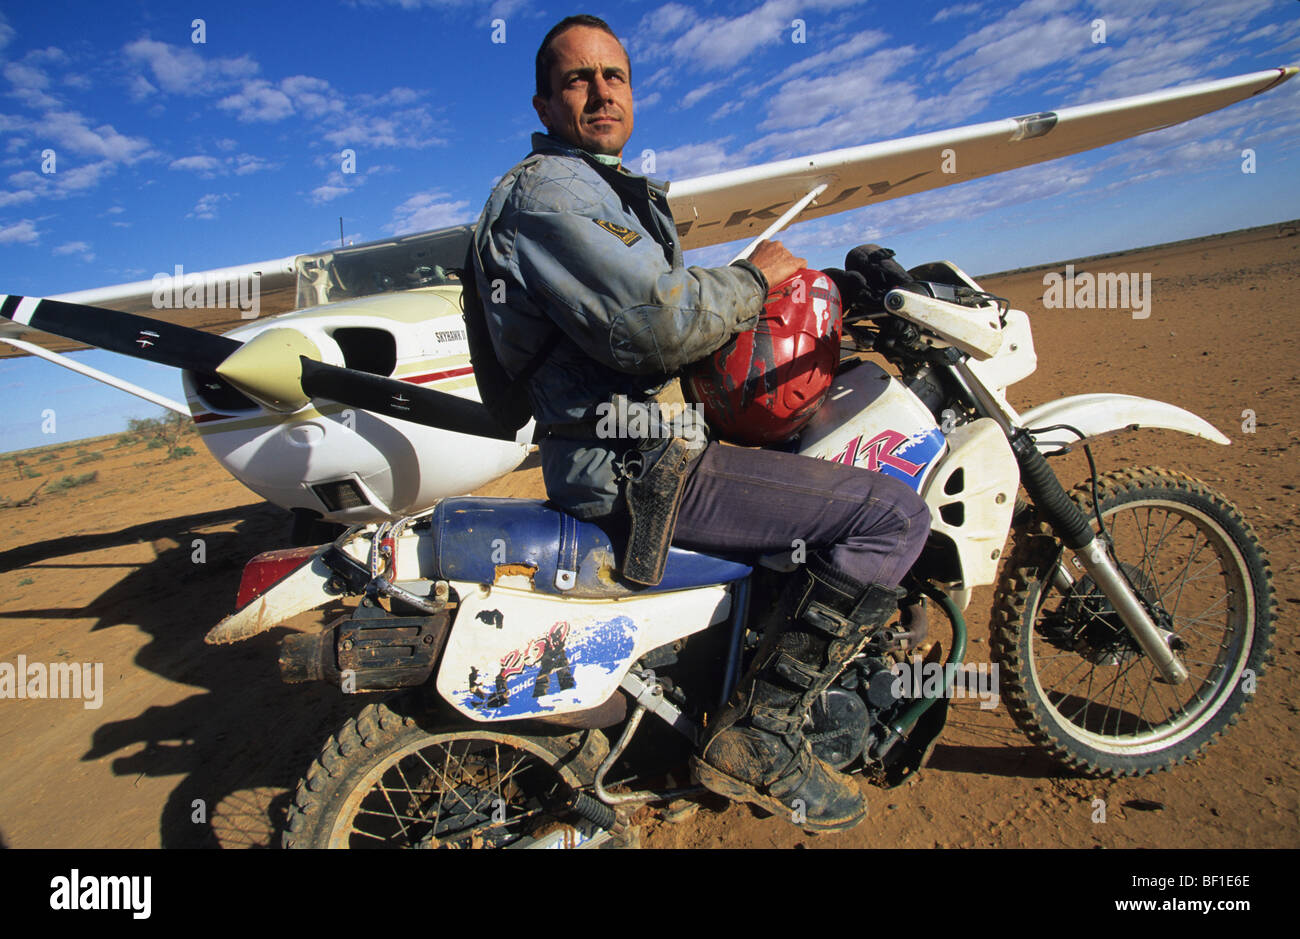 Cowboy with gun, sitting on motorbike with light airplane, Queensland Australia Stock Photo